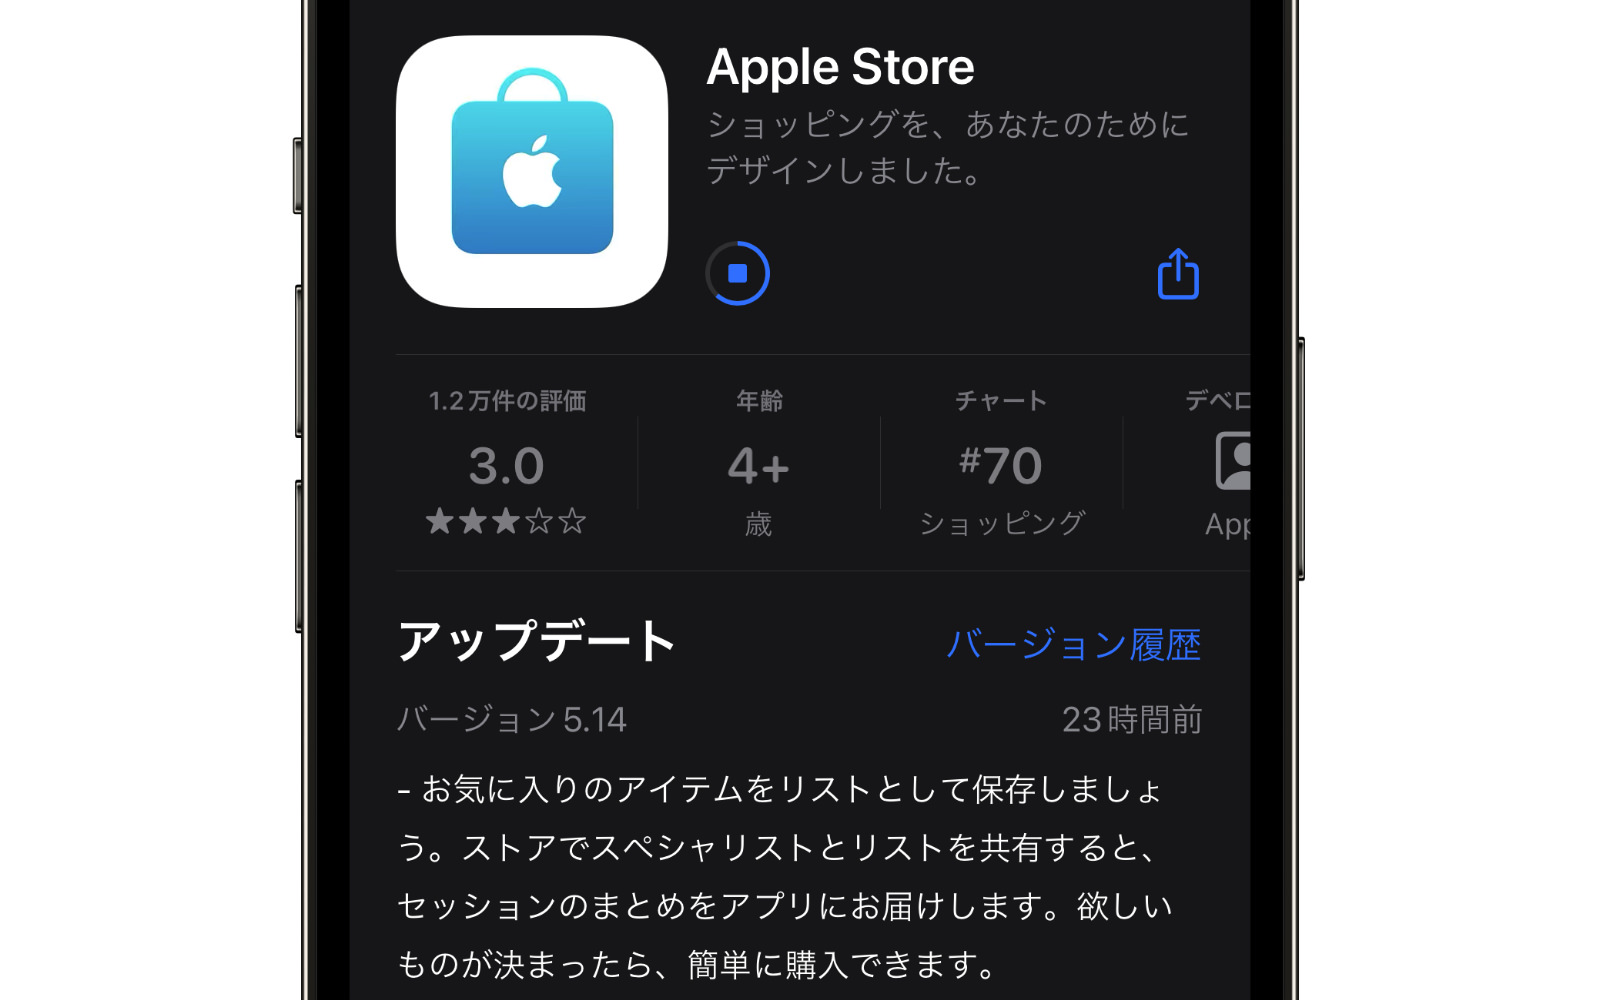 AppleStore App Update